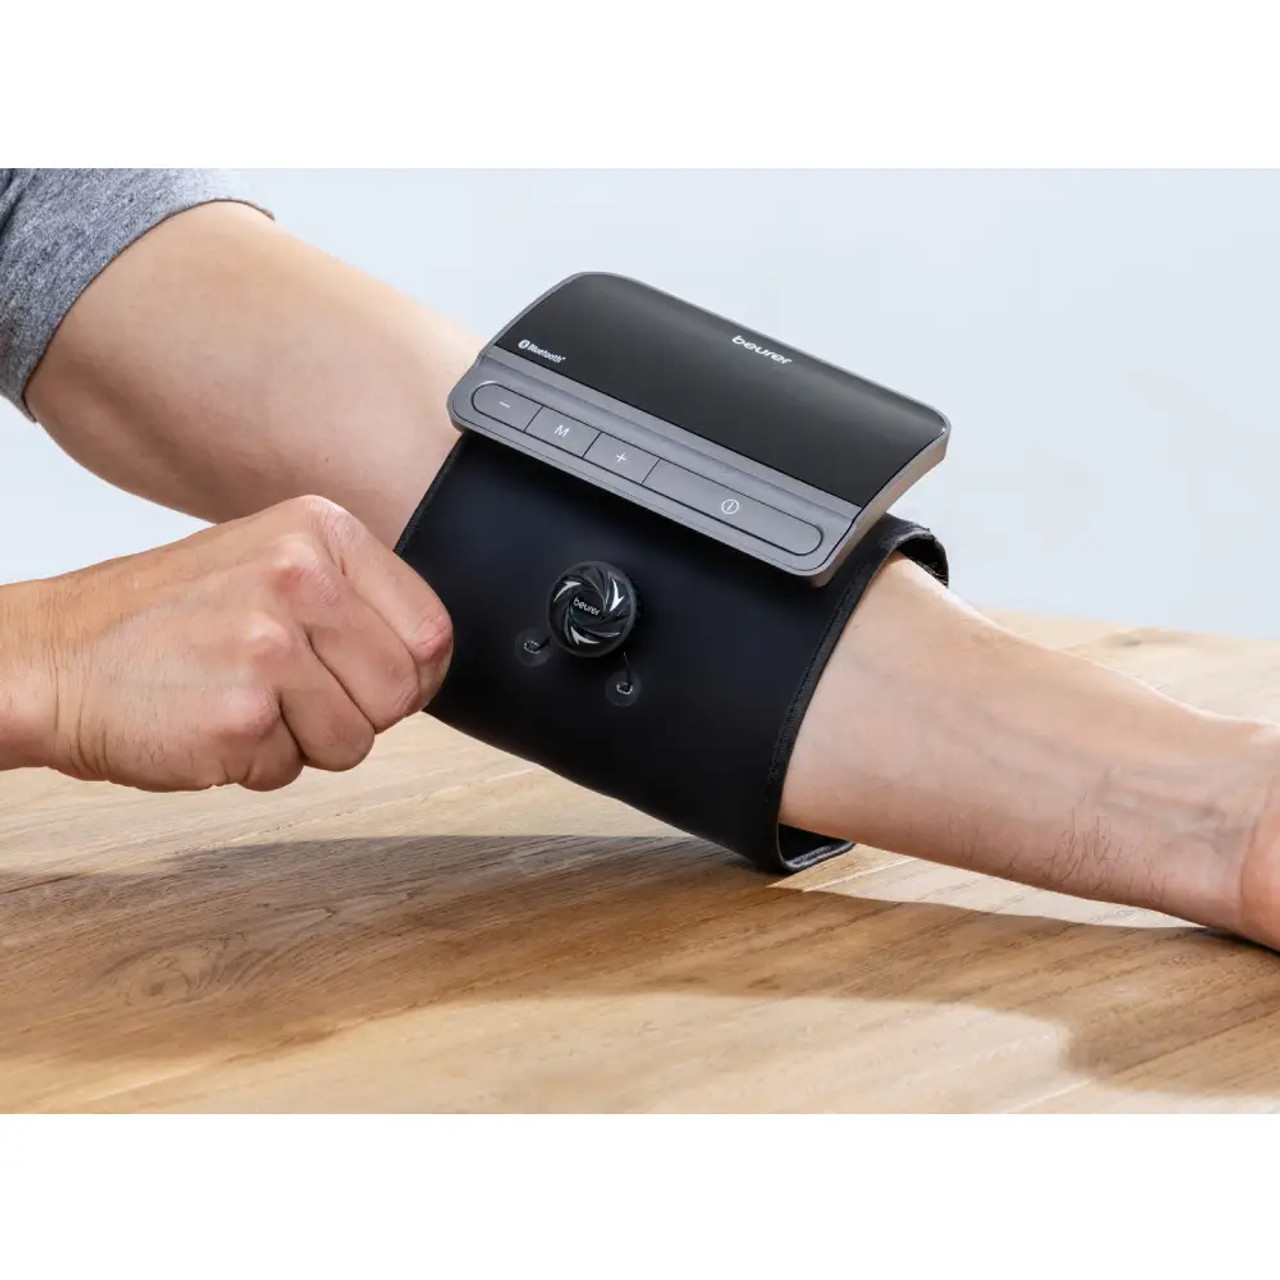 Beurer Bluetooth Wrist Blood Pressure Monitor BC54